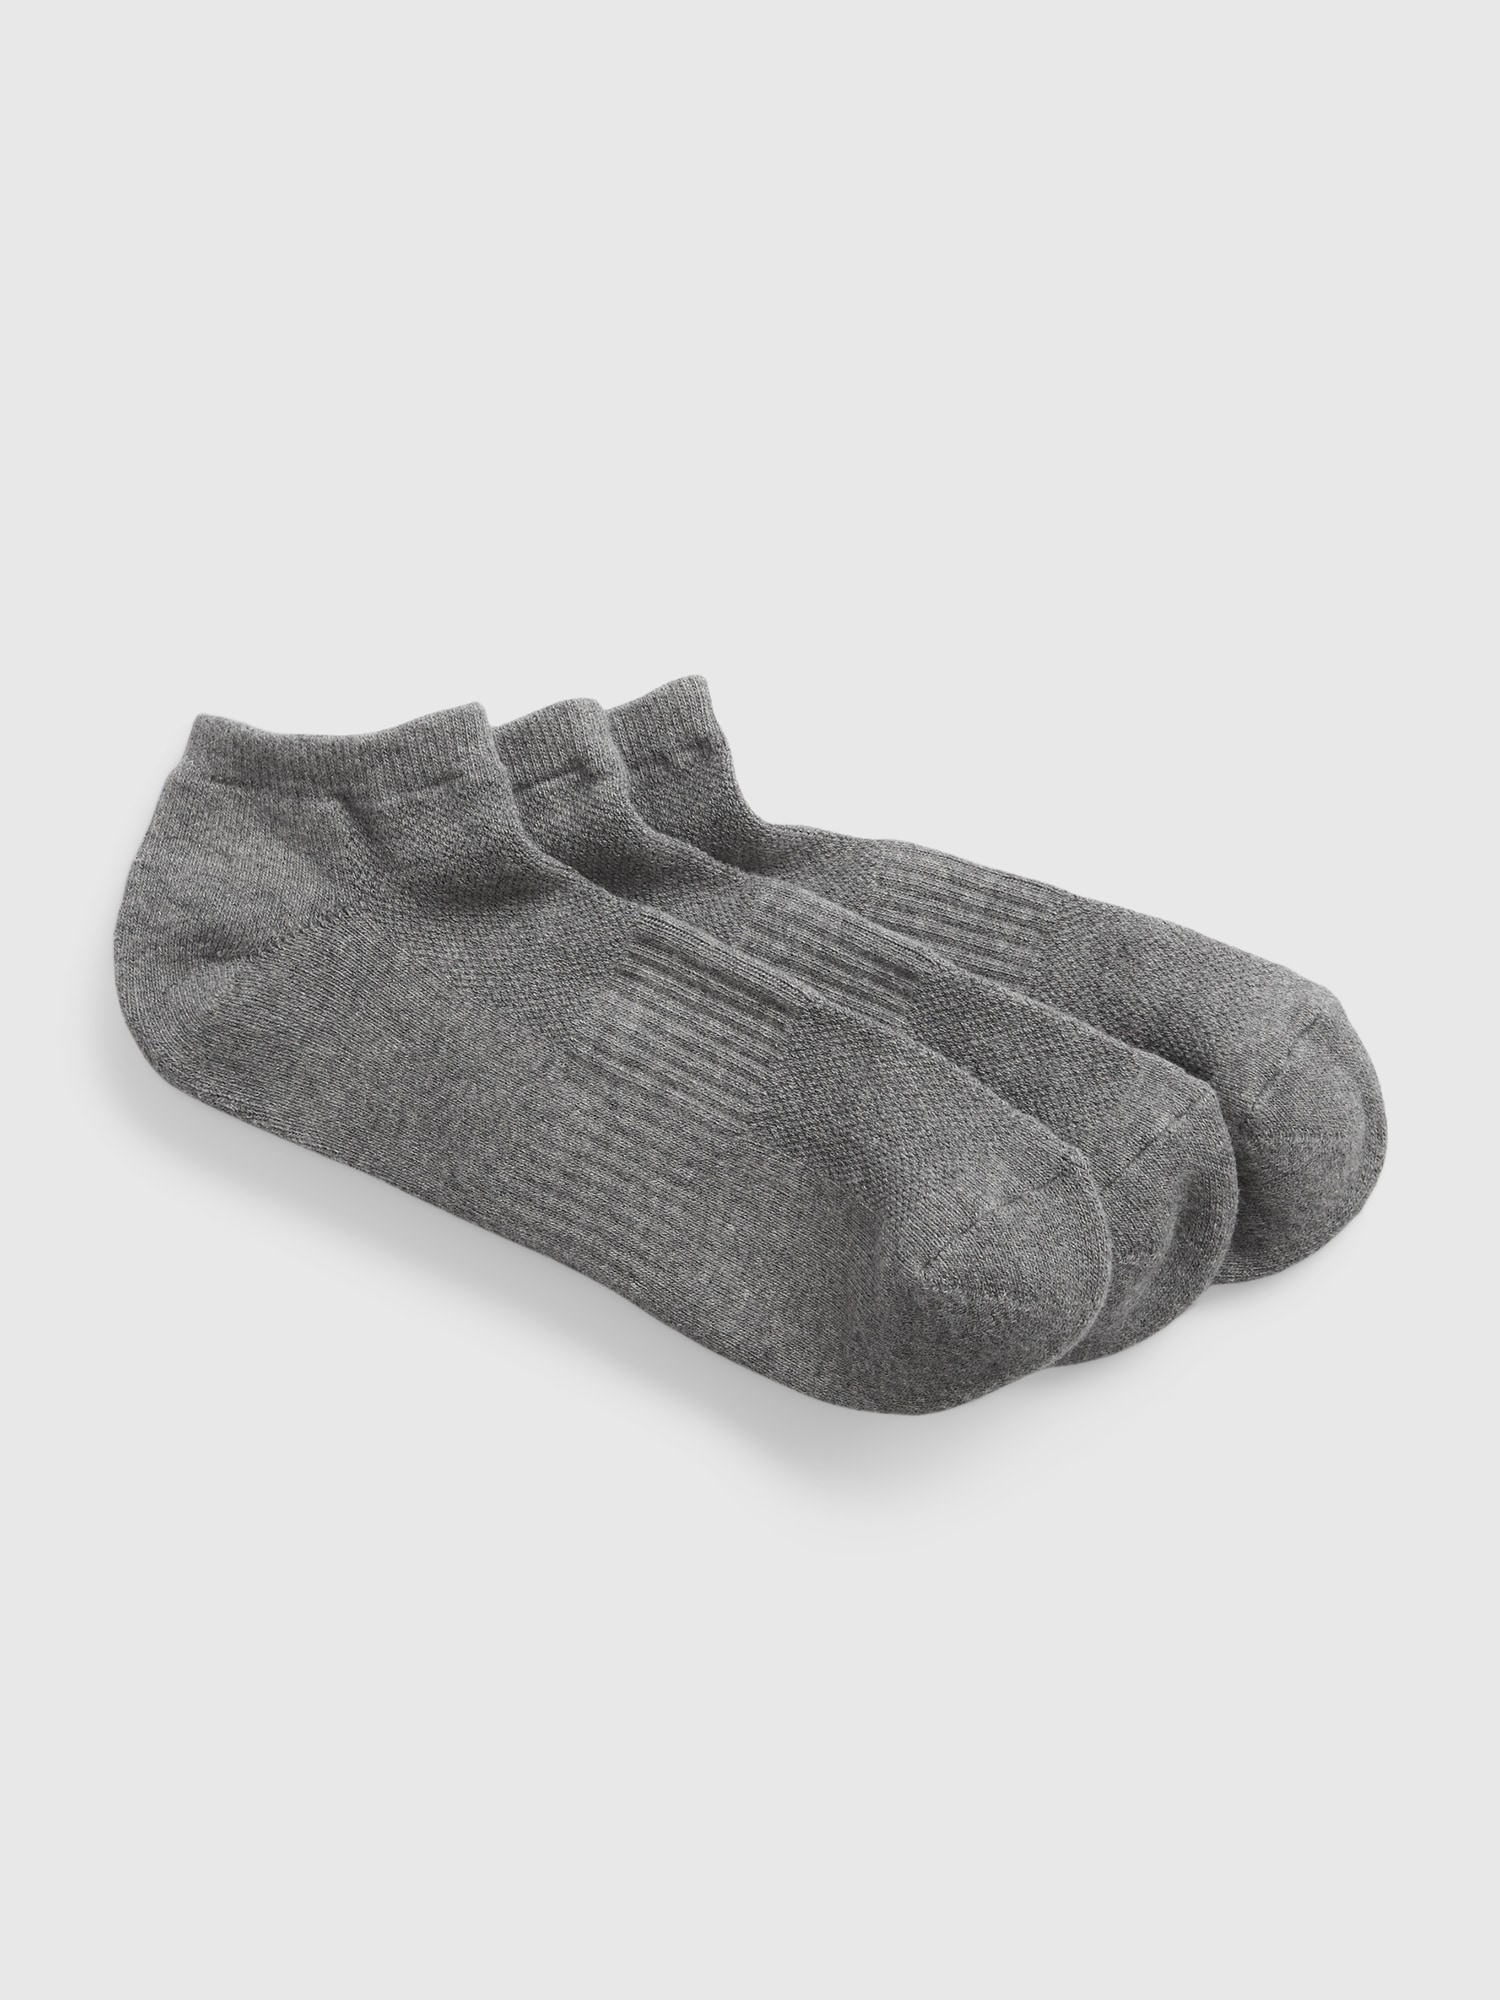 Gap Athletic Ankle Socks (3-Pack) gray. 1